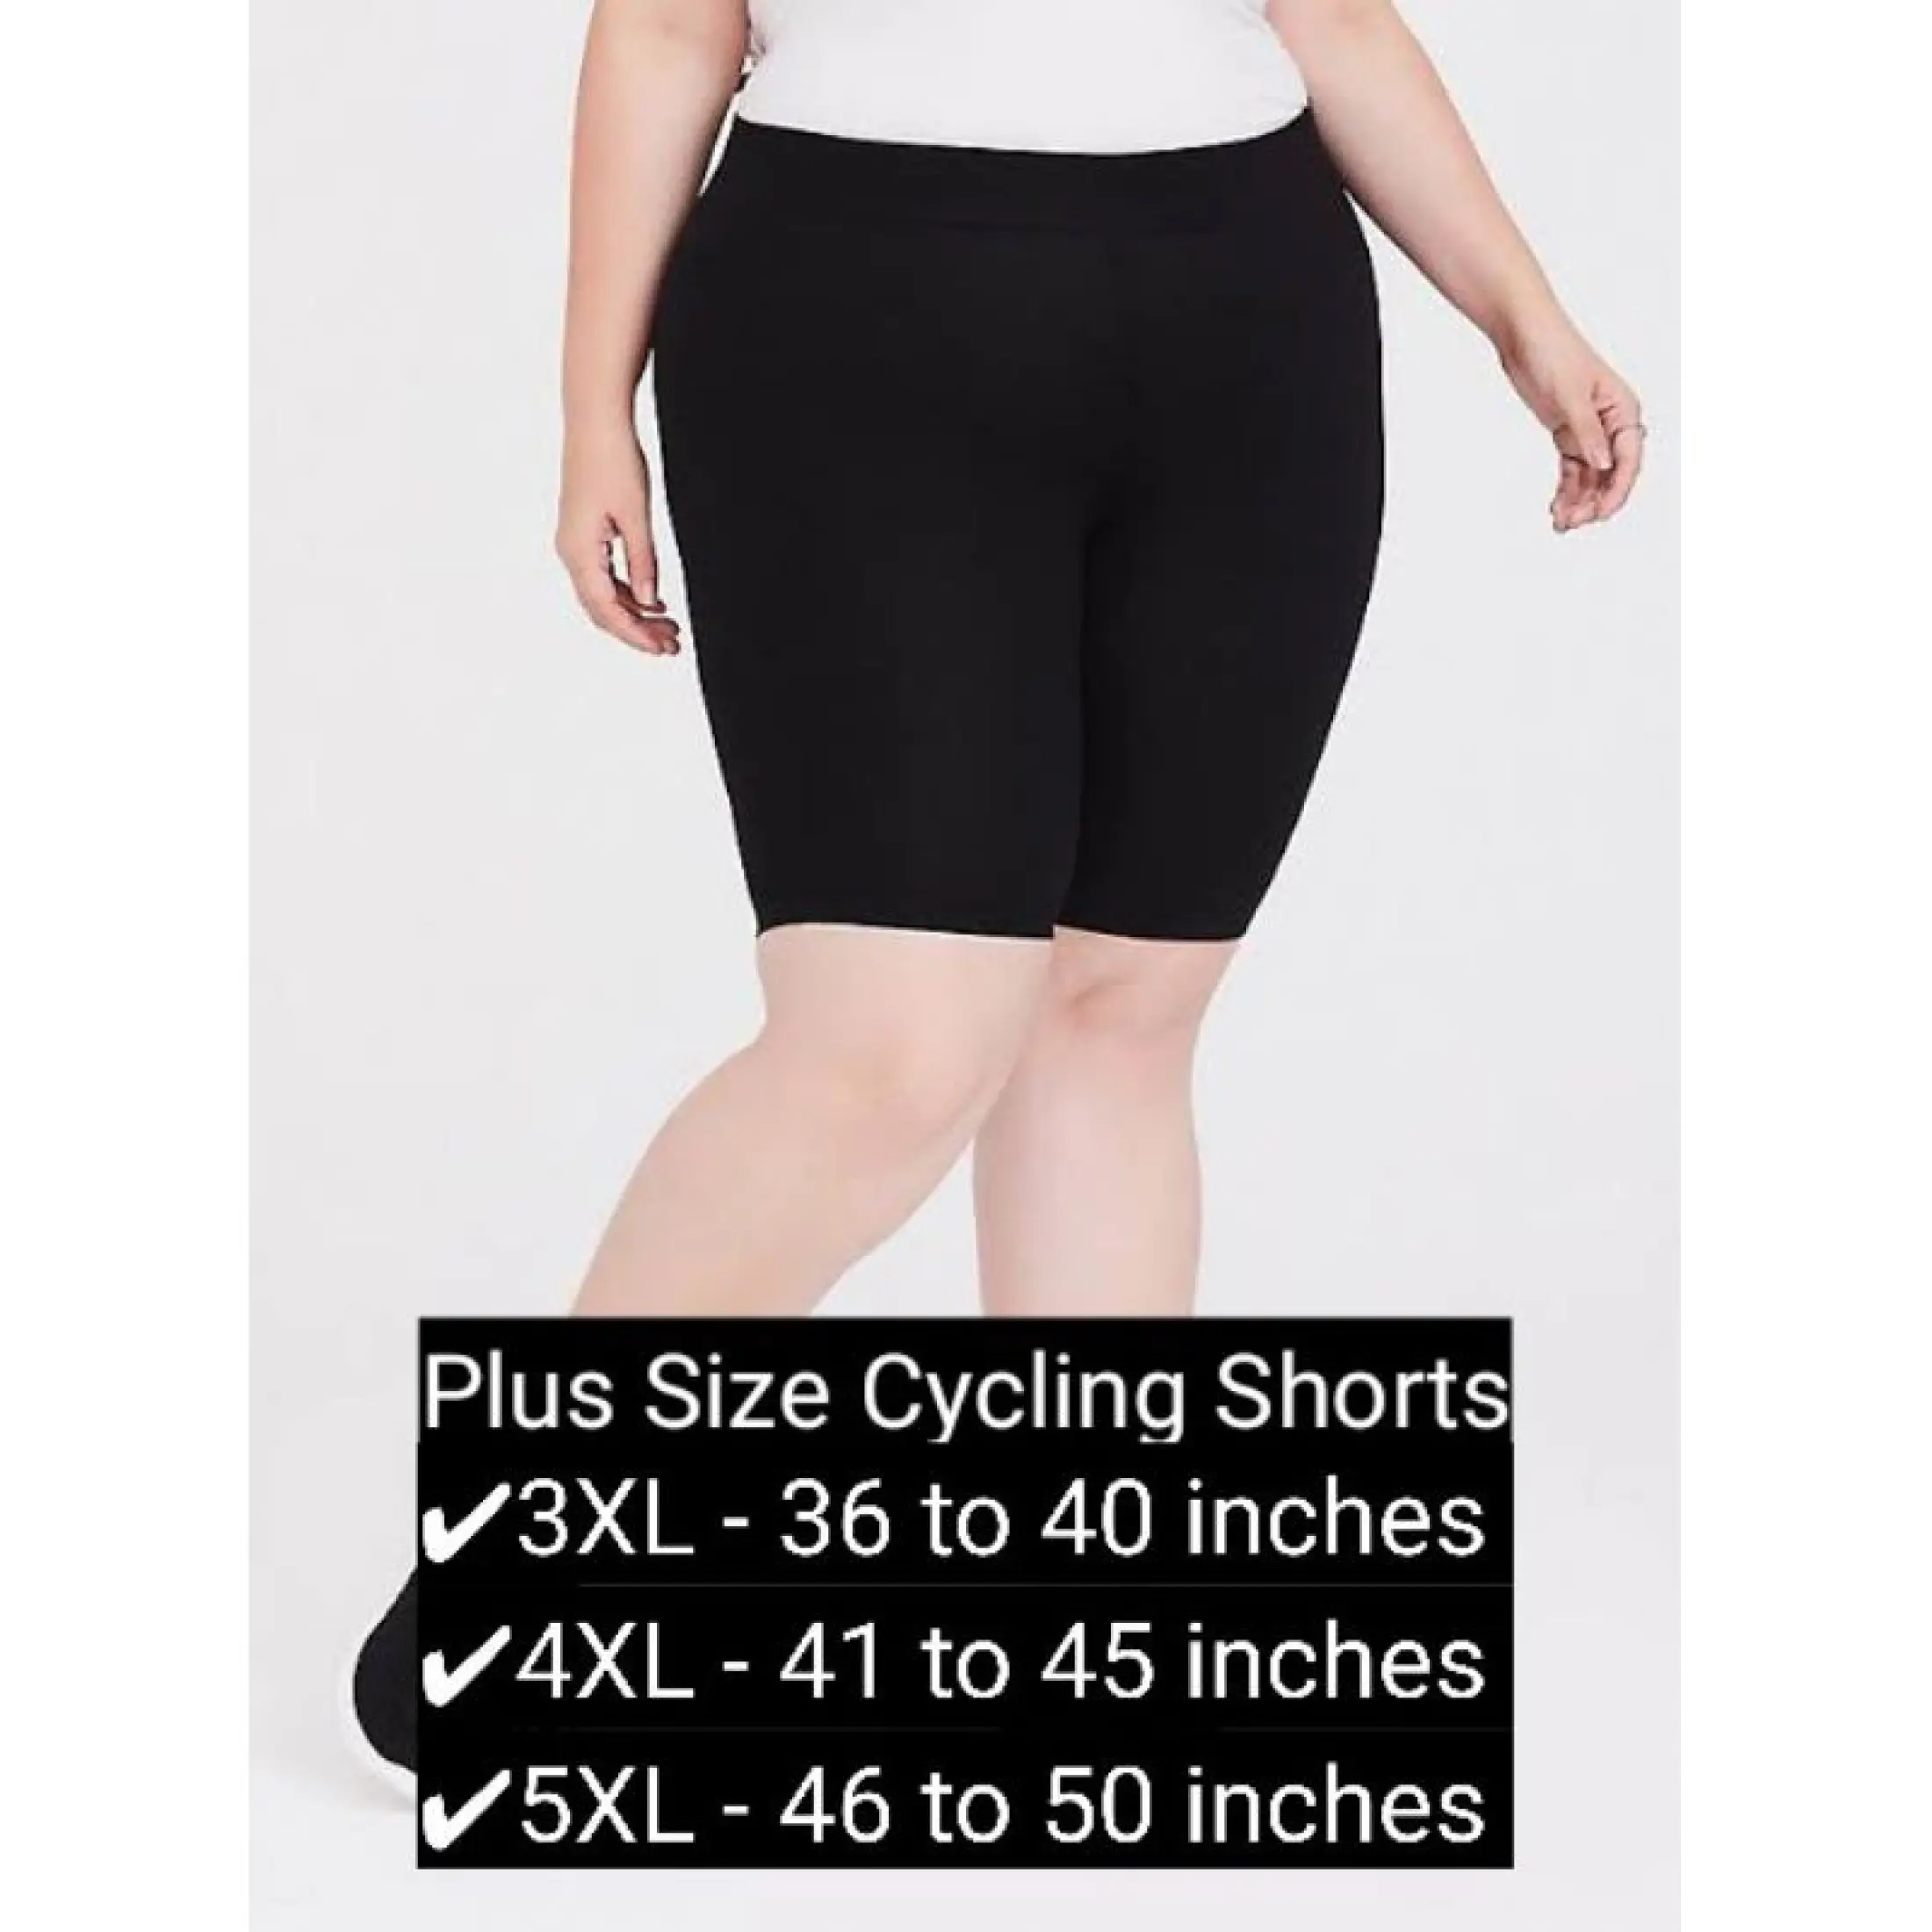 46 inch waist cycling shorts